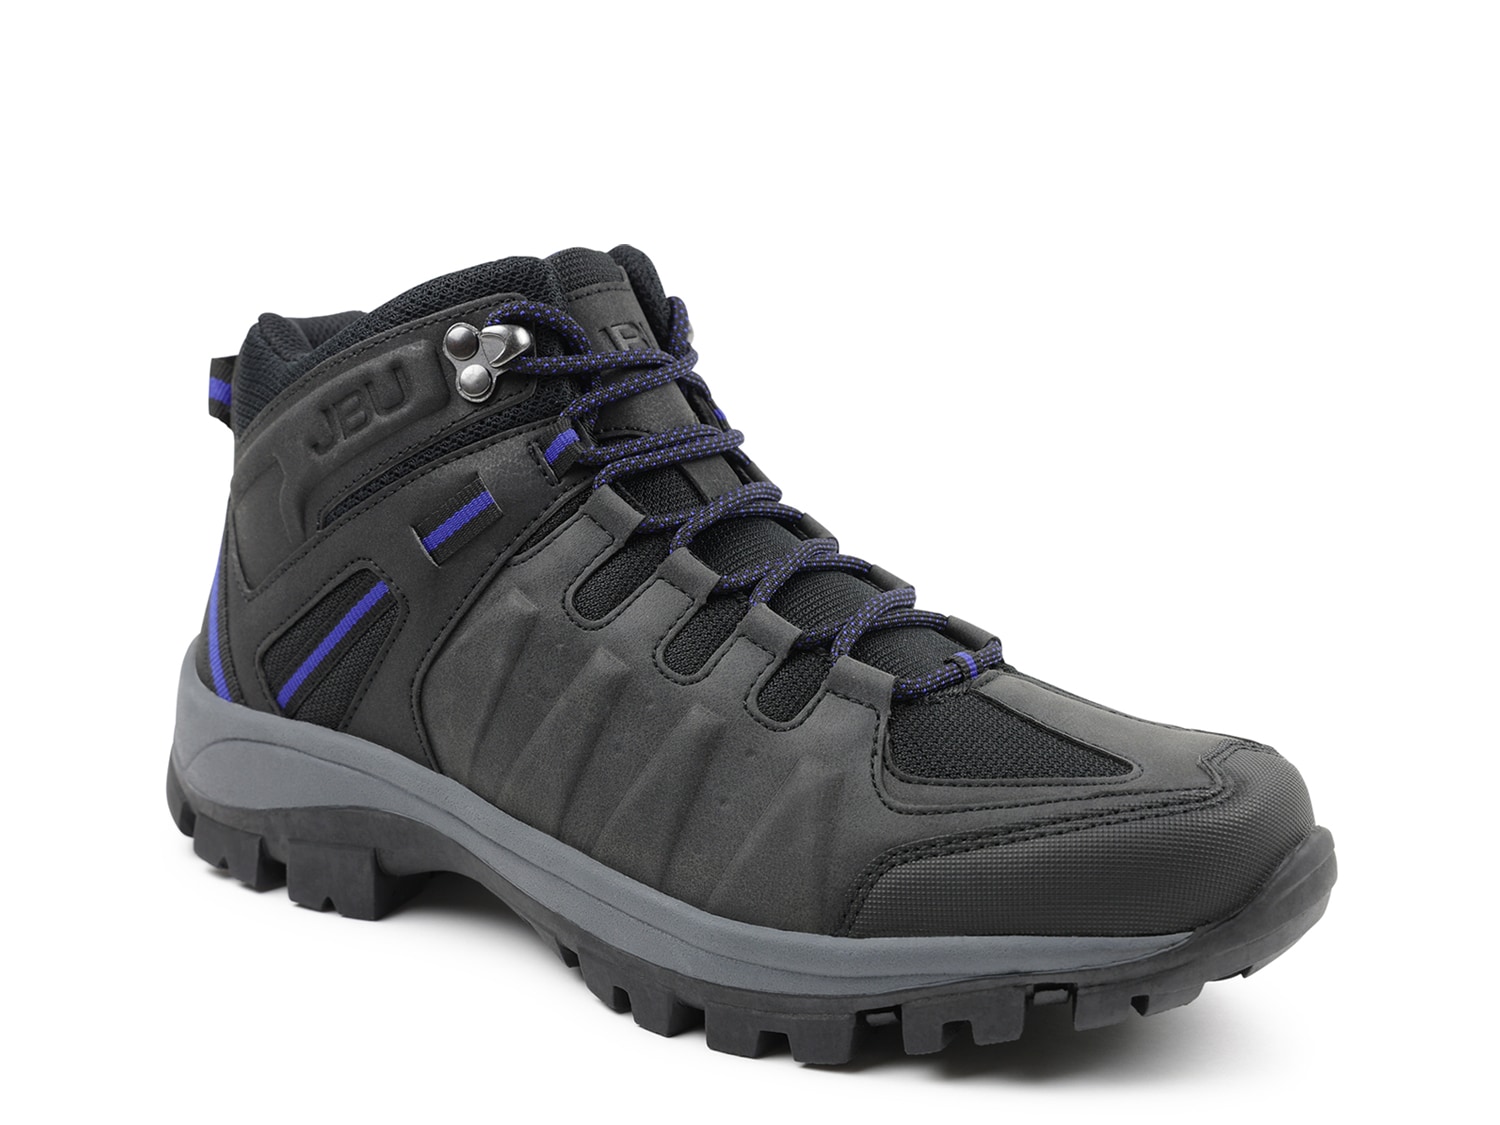 JBU by Jambu Teton Hiking Boot - Men's - Free Shipping | DSW